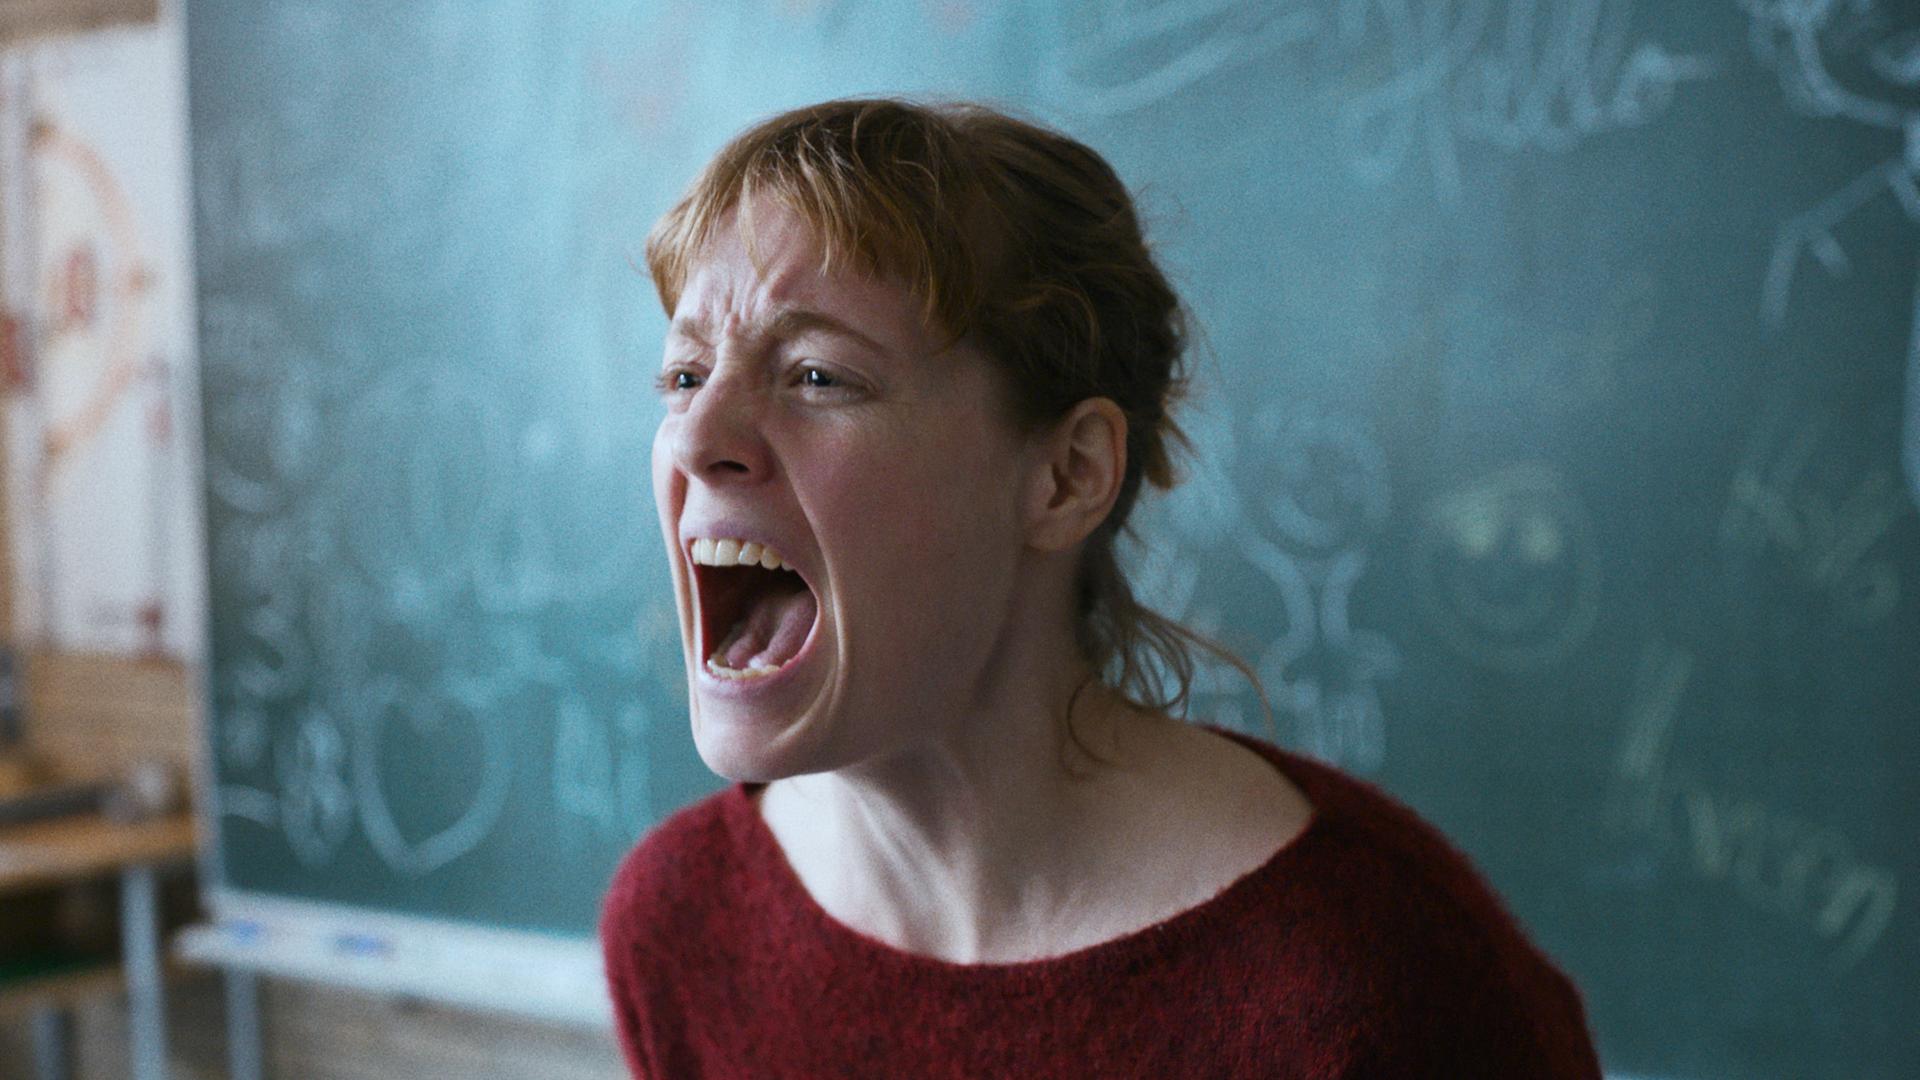 Leonie Benesch als Lehrerin Carla Nowak in İlker Çataks "Das Lehrerzimmer".